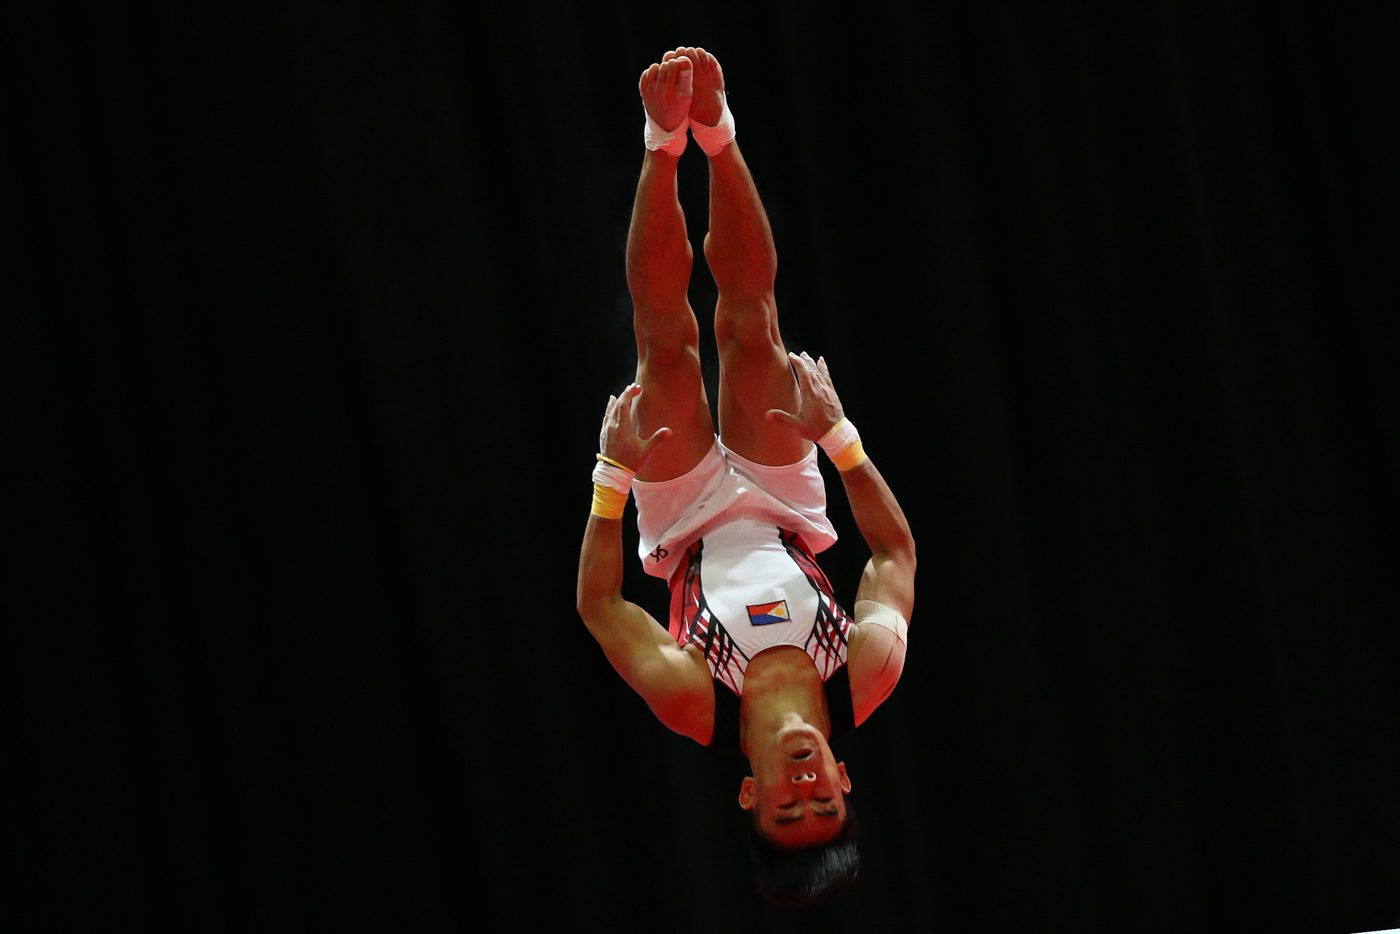 Gymnast Capellan wins PH’s 4th gold of 2017 SEA Games